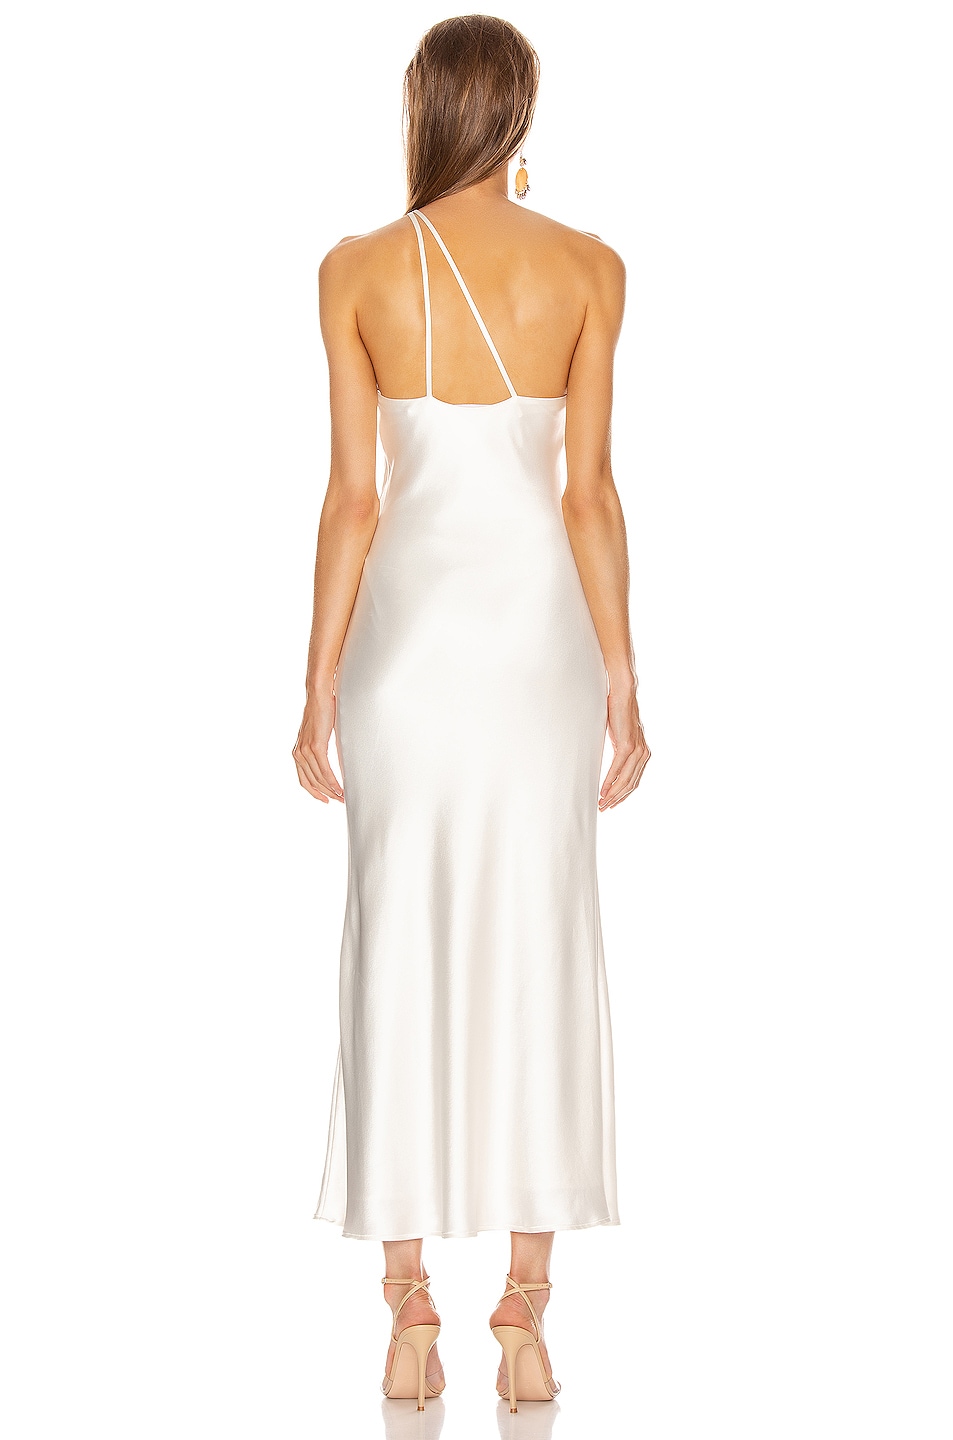 GALVAN Ibiza Dress in White | FWRD